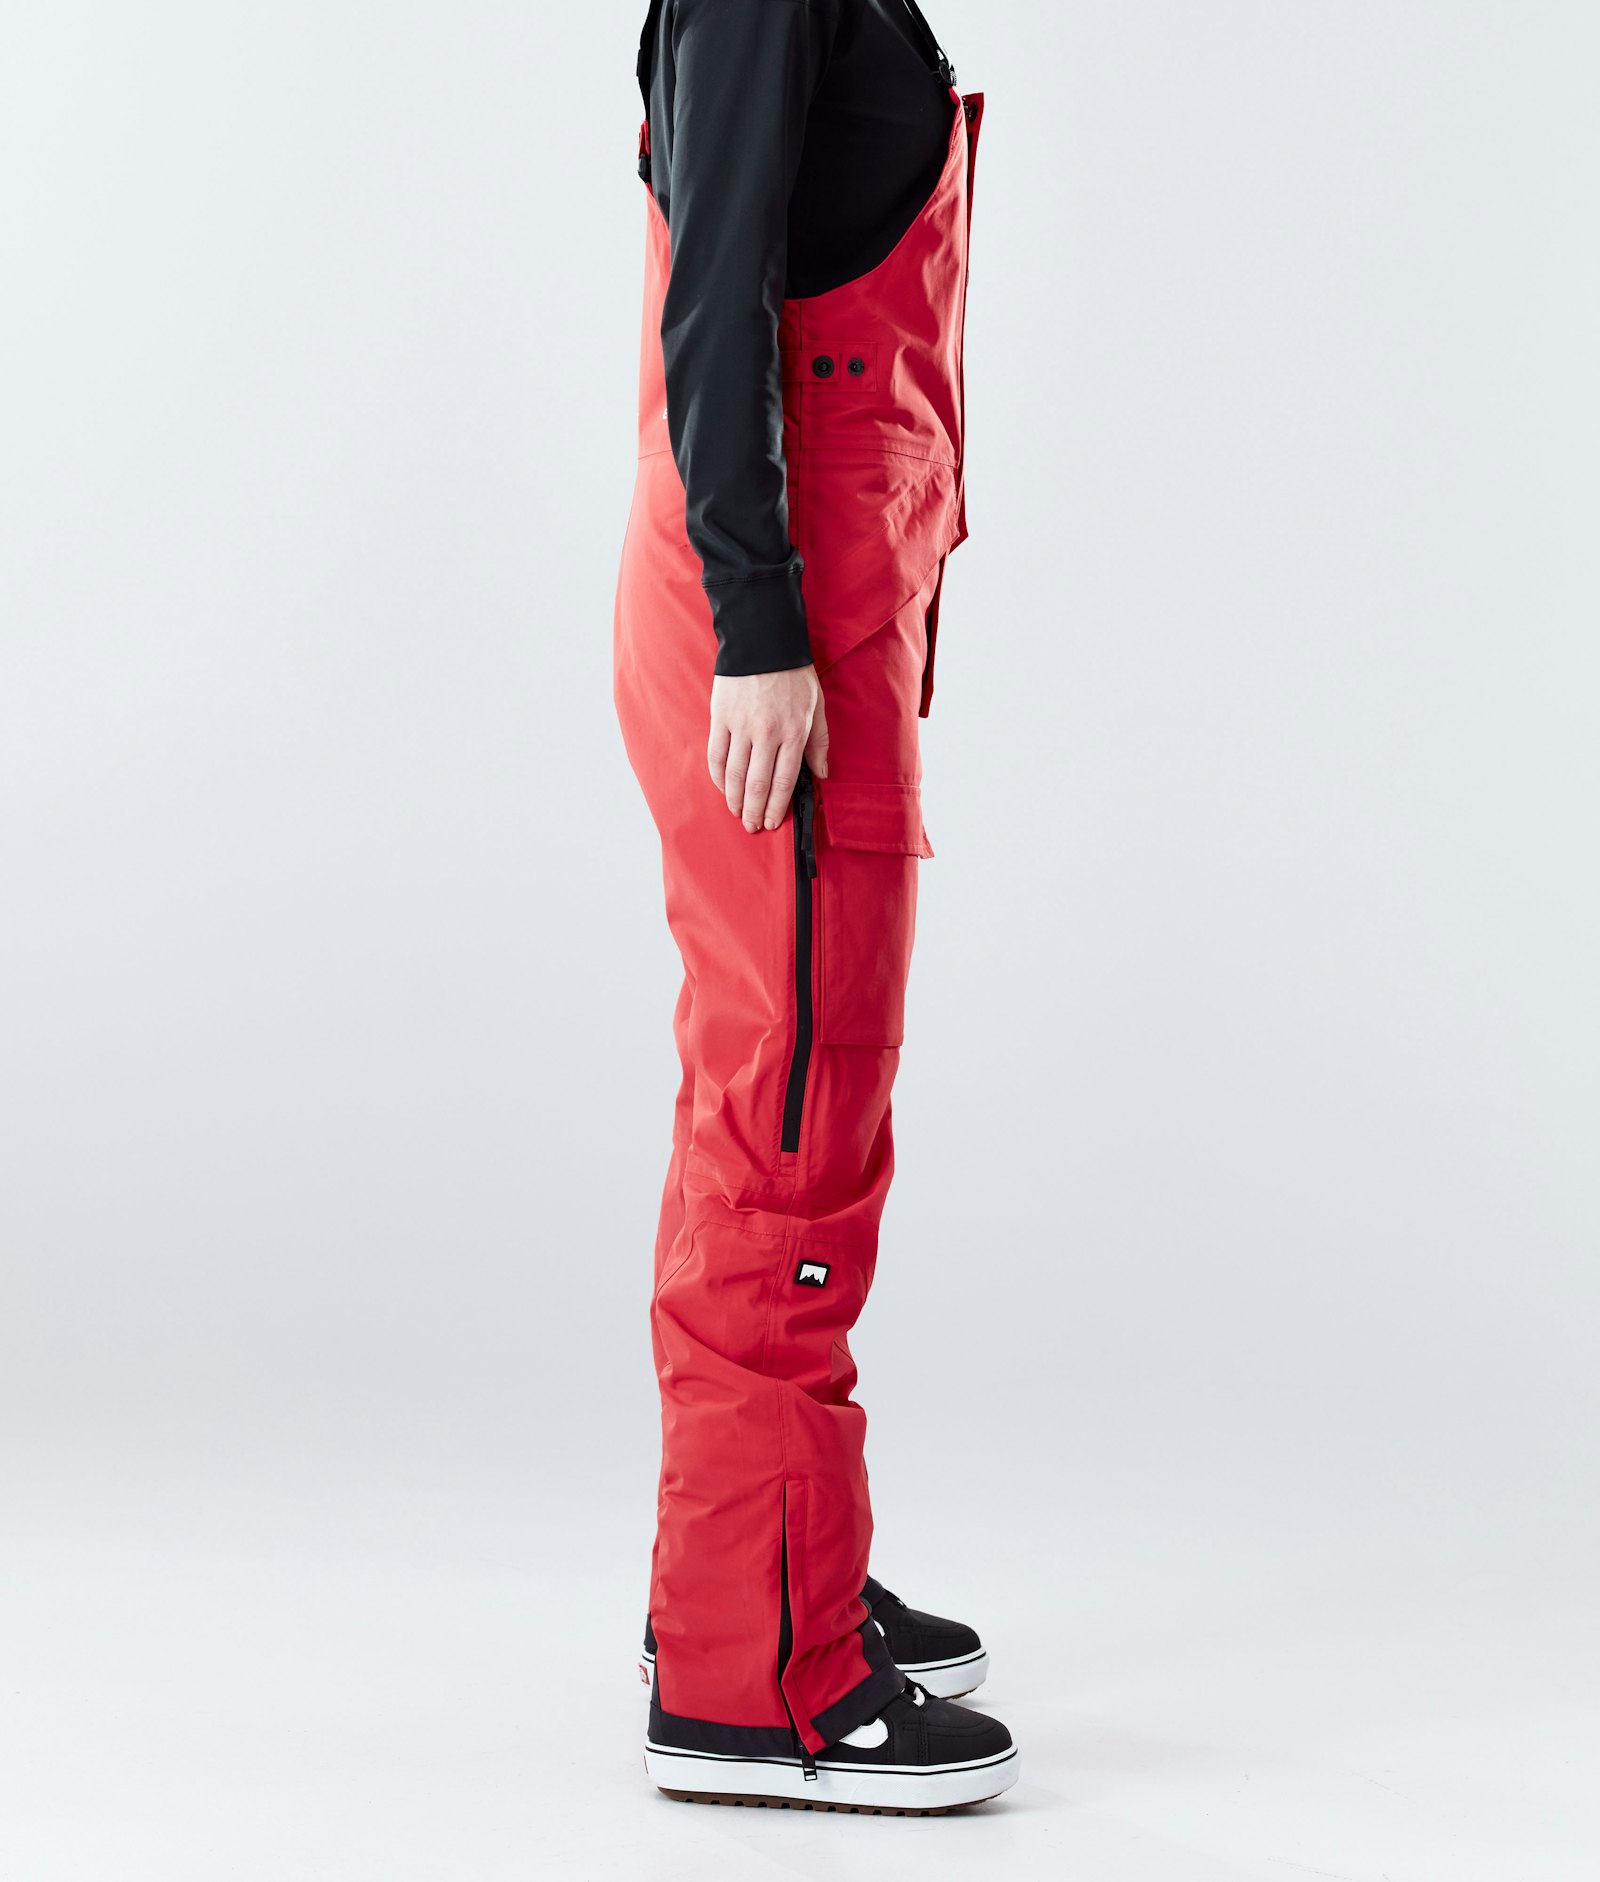 Montec Fawk W 2020 Snowboard Pants Women Red